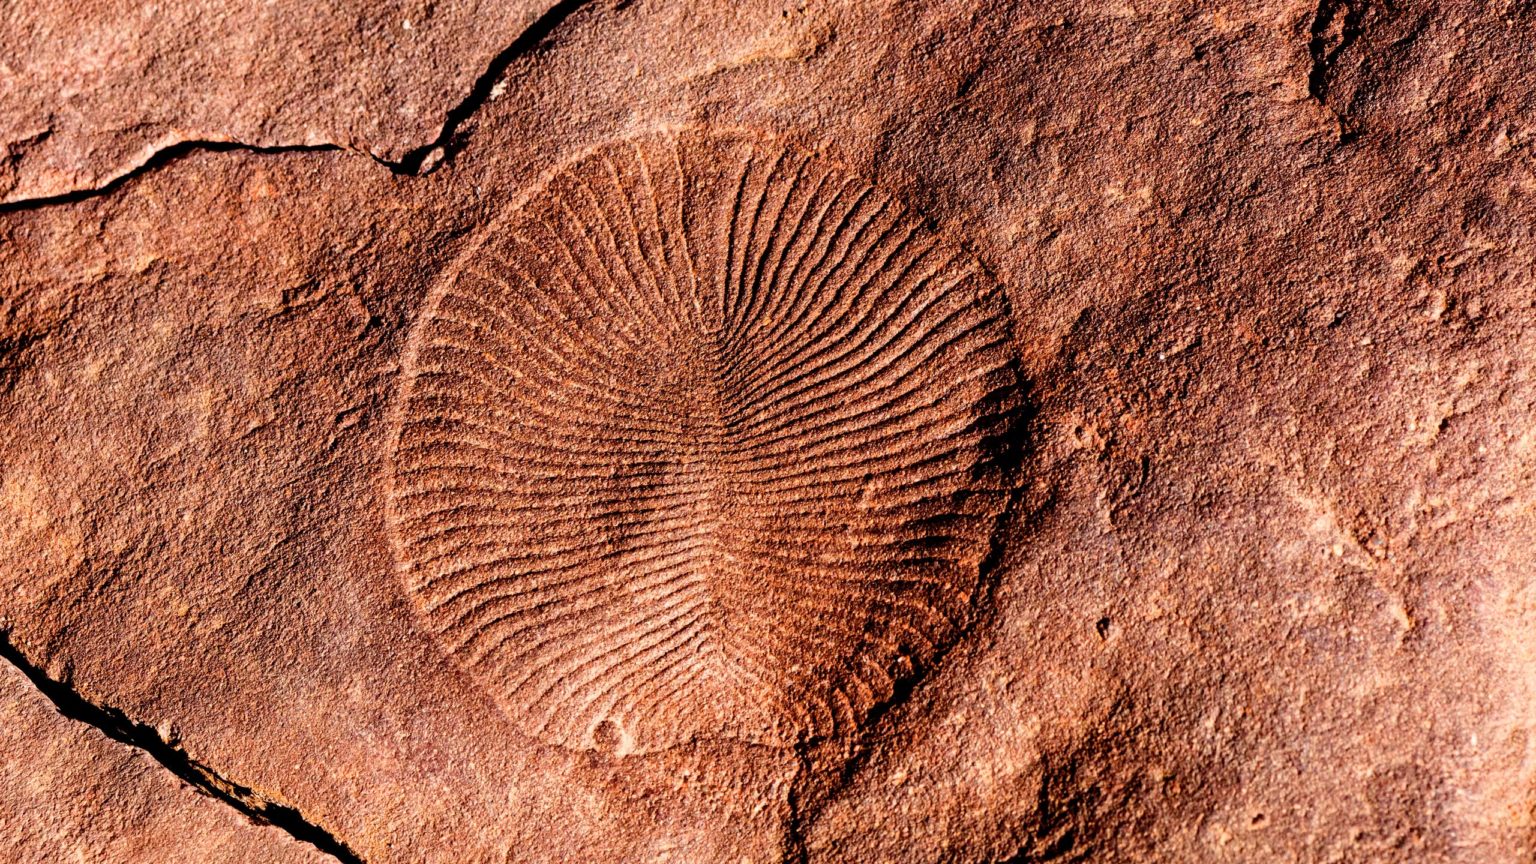 Special Presentation | The Ediacaran fossils of South Australia